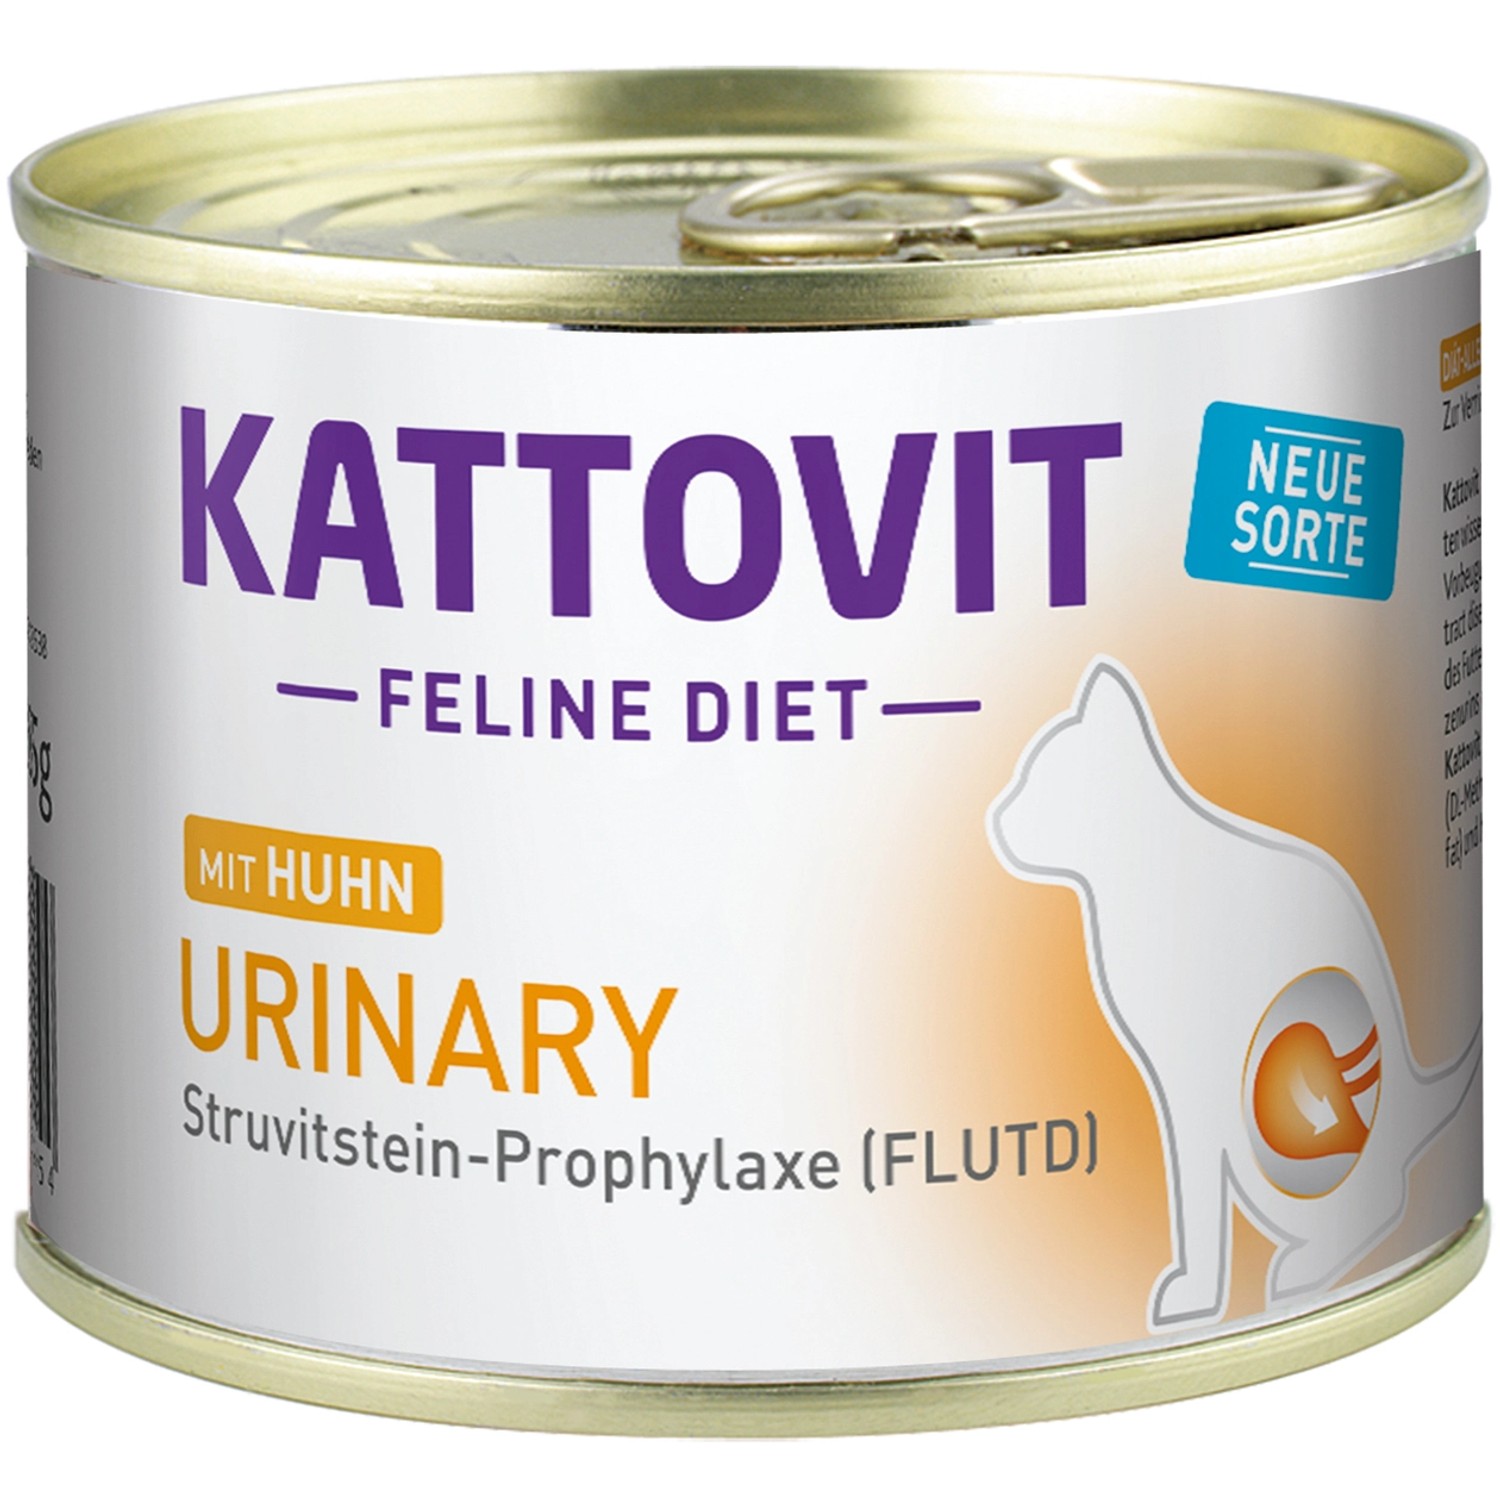 Kattovit Spezialfutter für Katzen Urinary mit Huhn 185 g